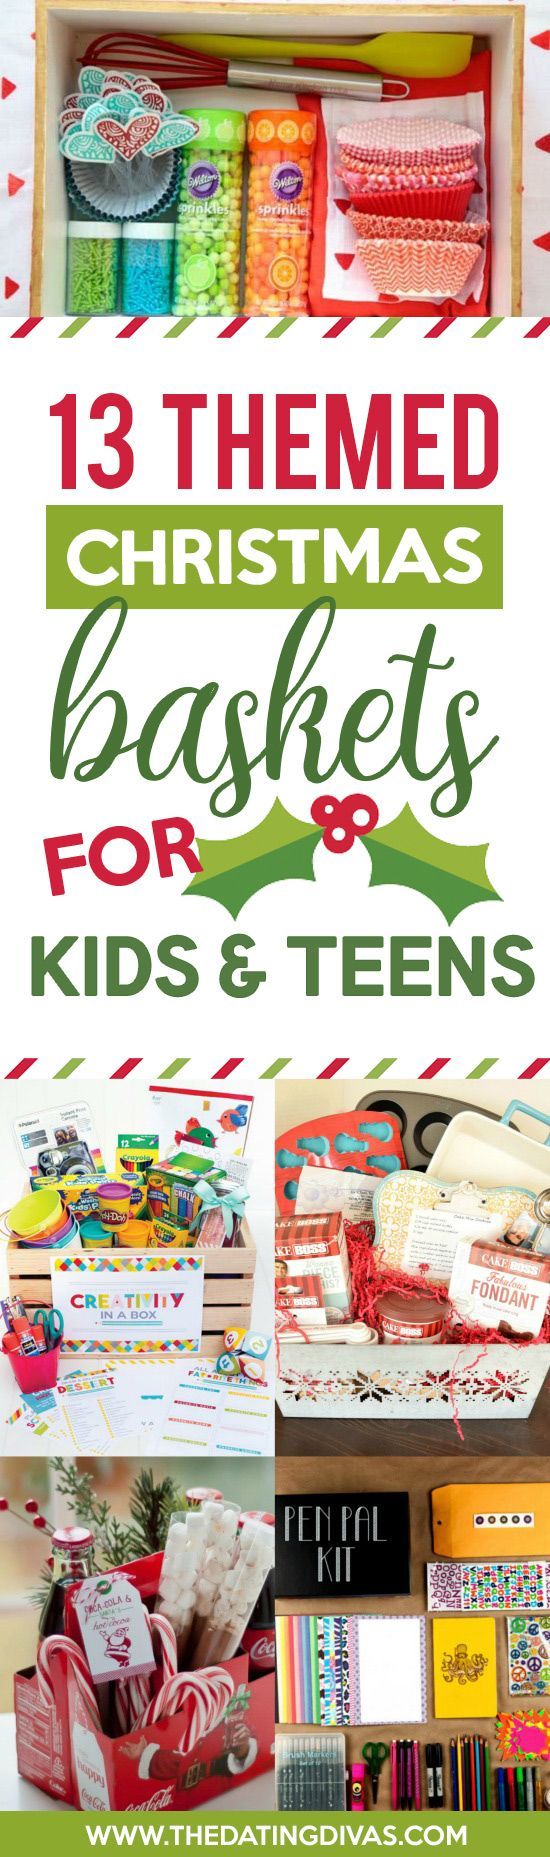 Themed Christmas Gift Baskets for Kids and Teens